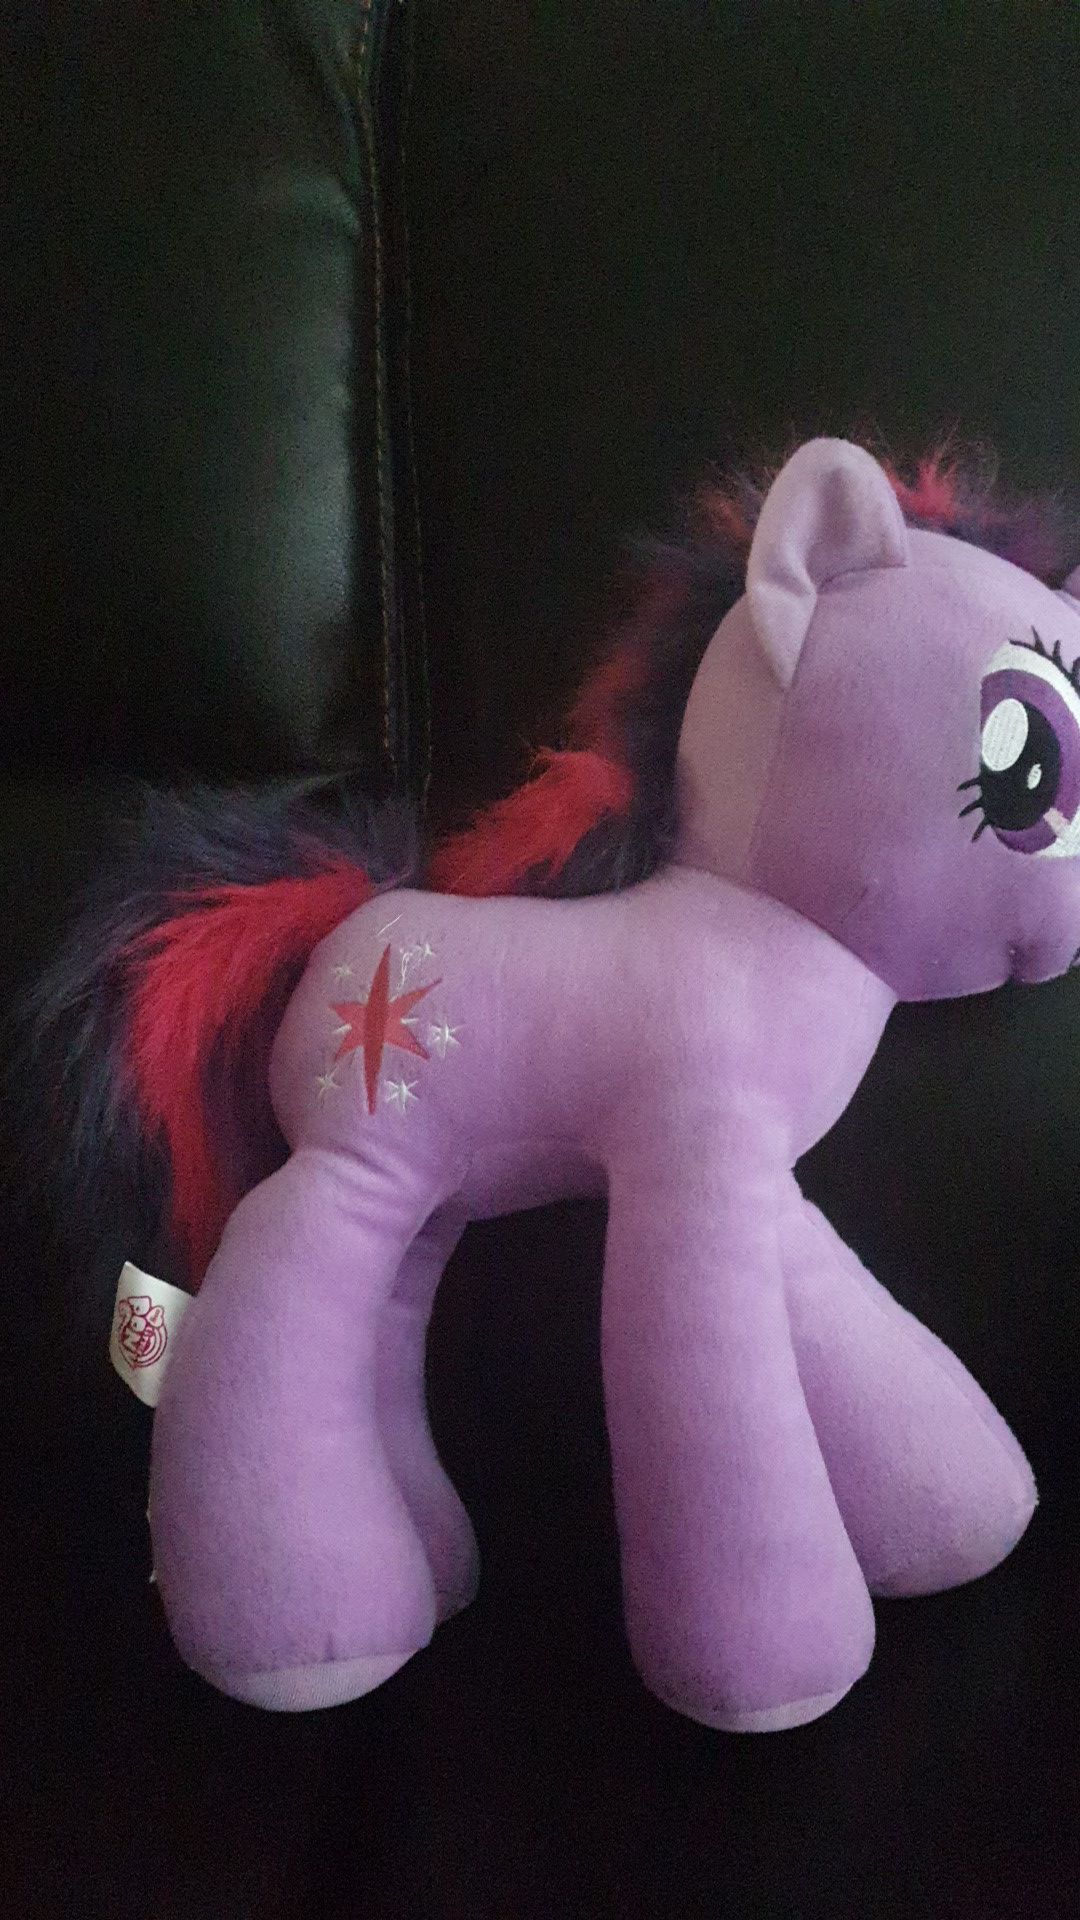 My Little Pony stuffed animal